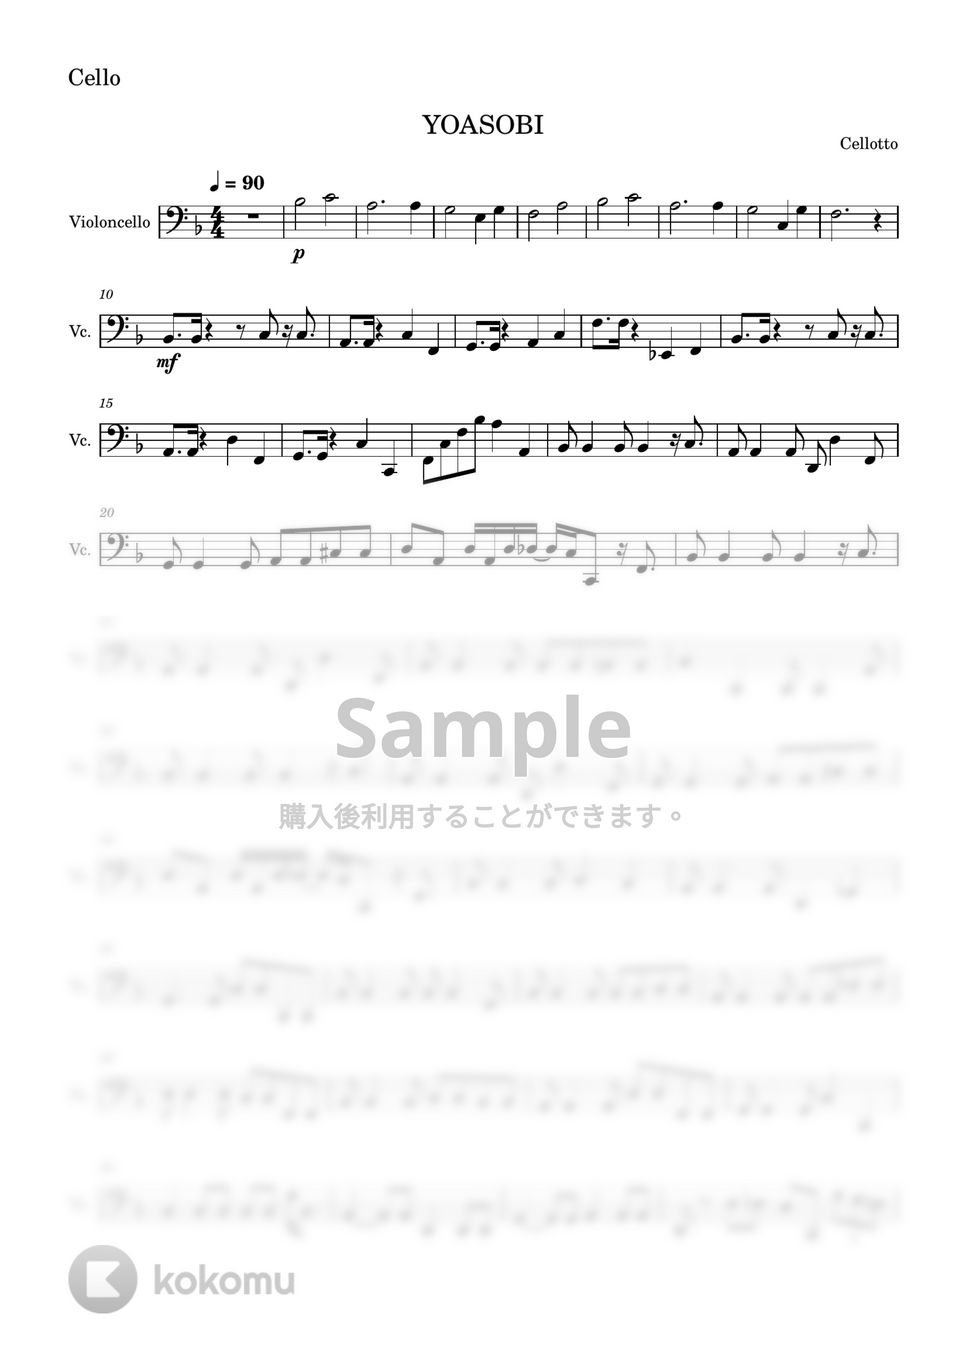 YOASOBI - 優しい彗星 (チェロ-弦楽四重奏) by Cellotto